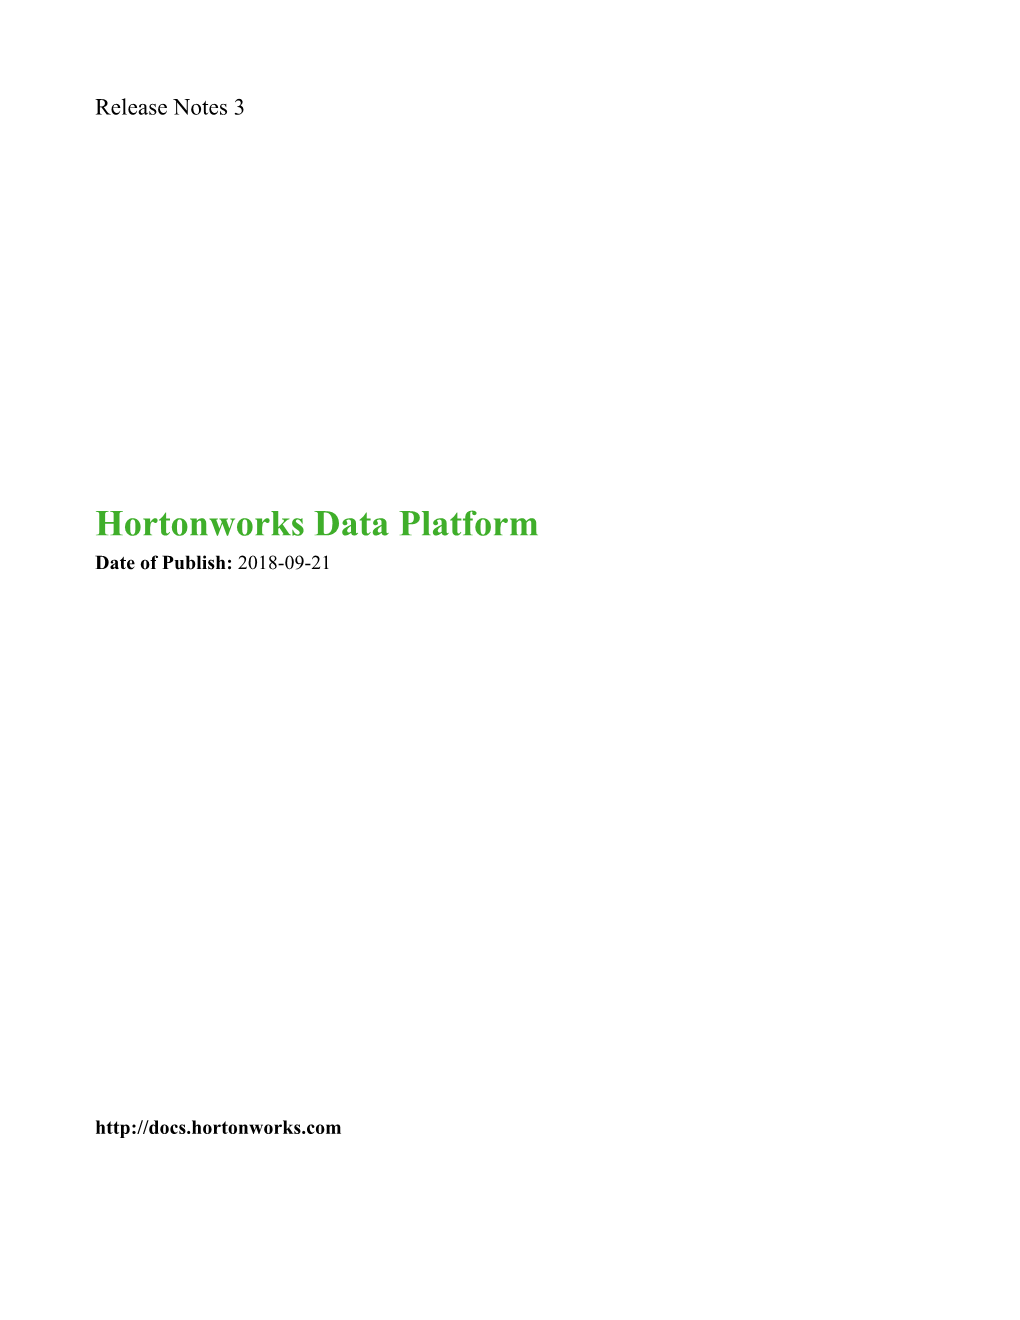 Hortonworks Data Platform Date of Publish: 2018-09-21